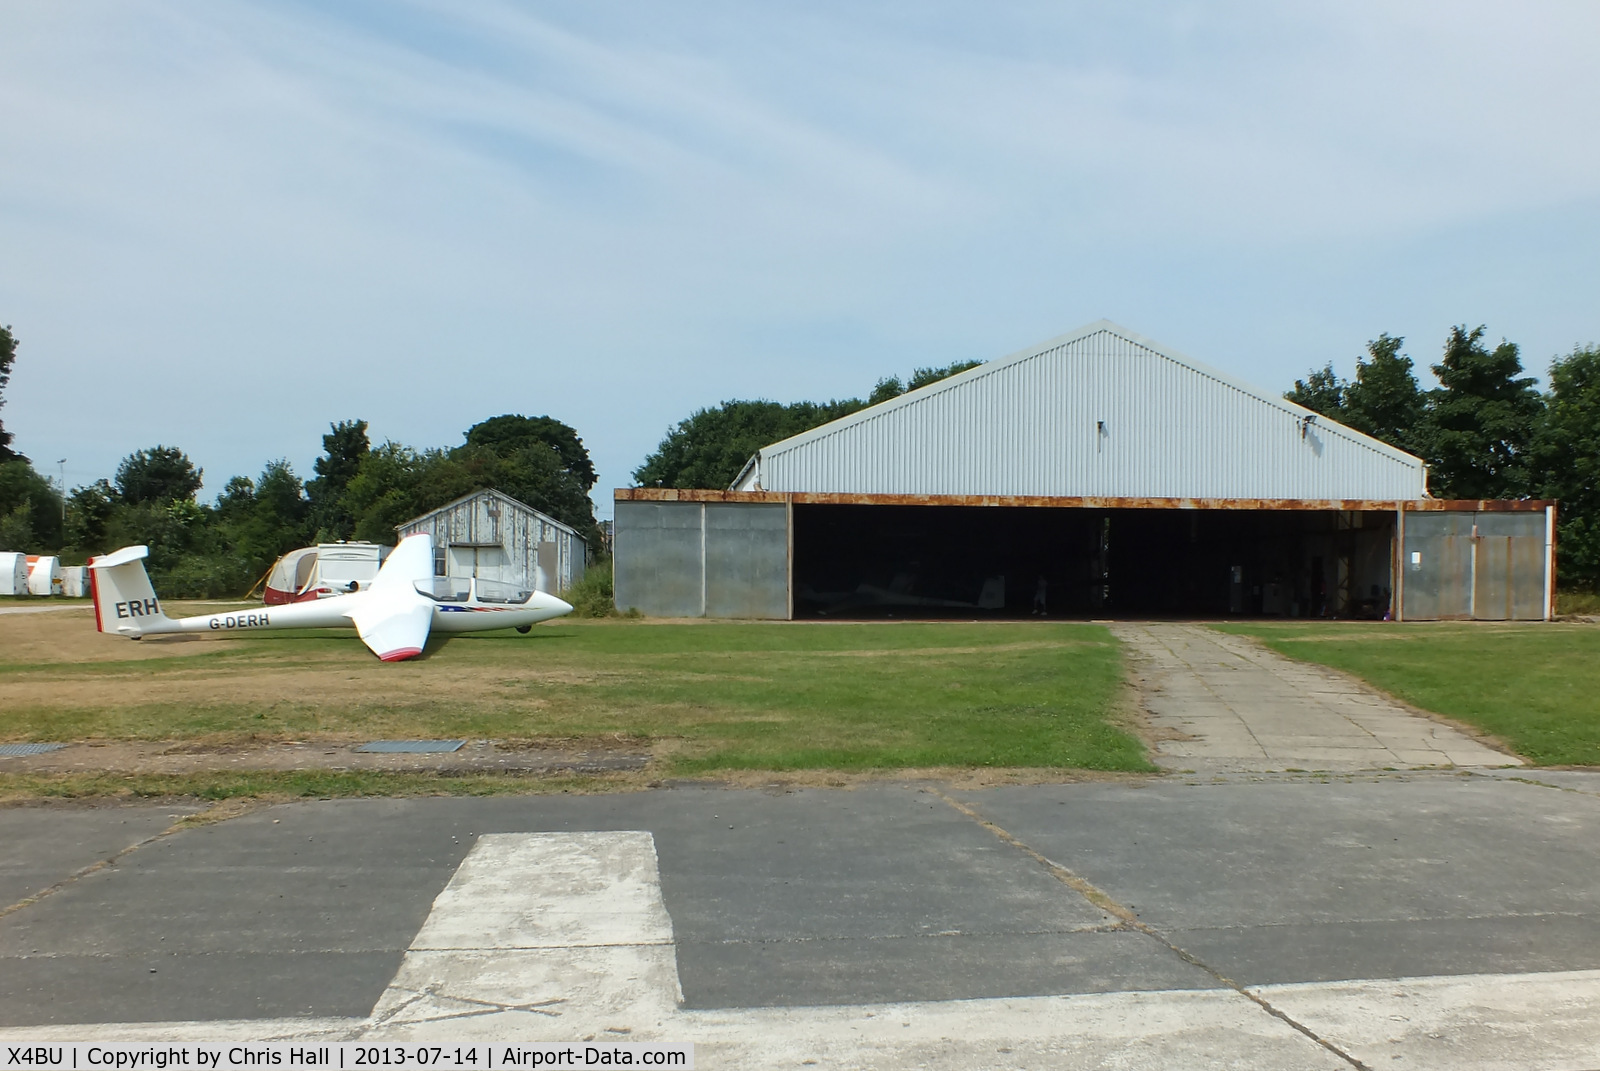 X4BU Airport - Burn Gliding Club hangar